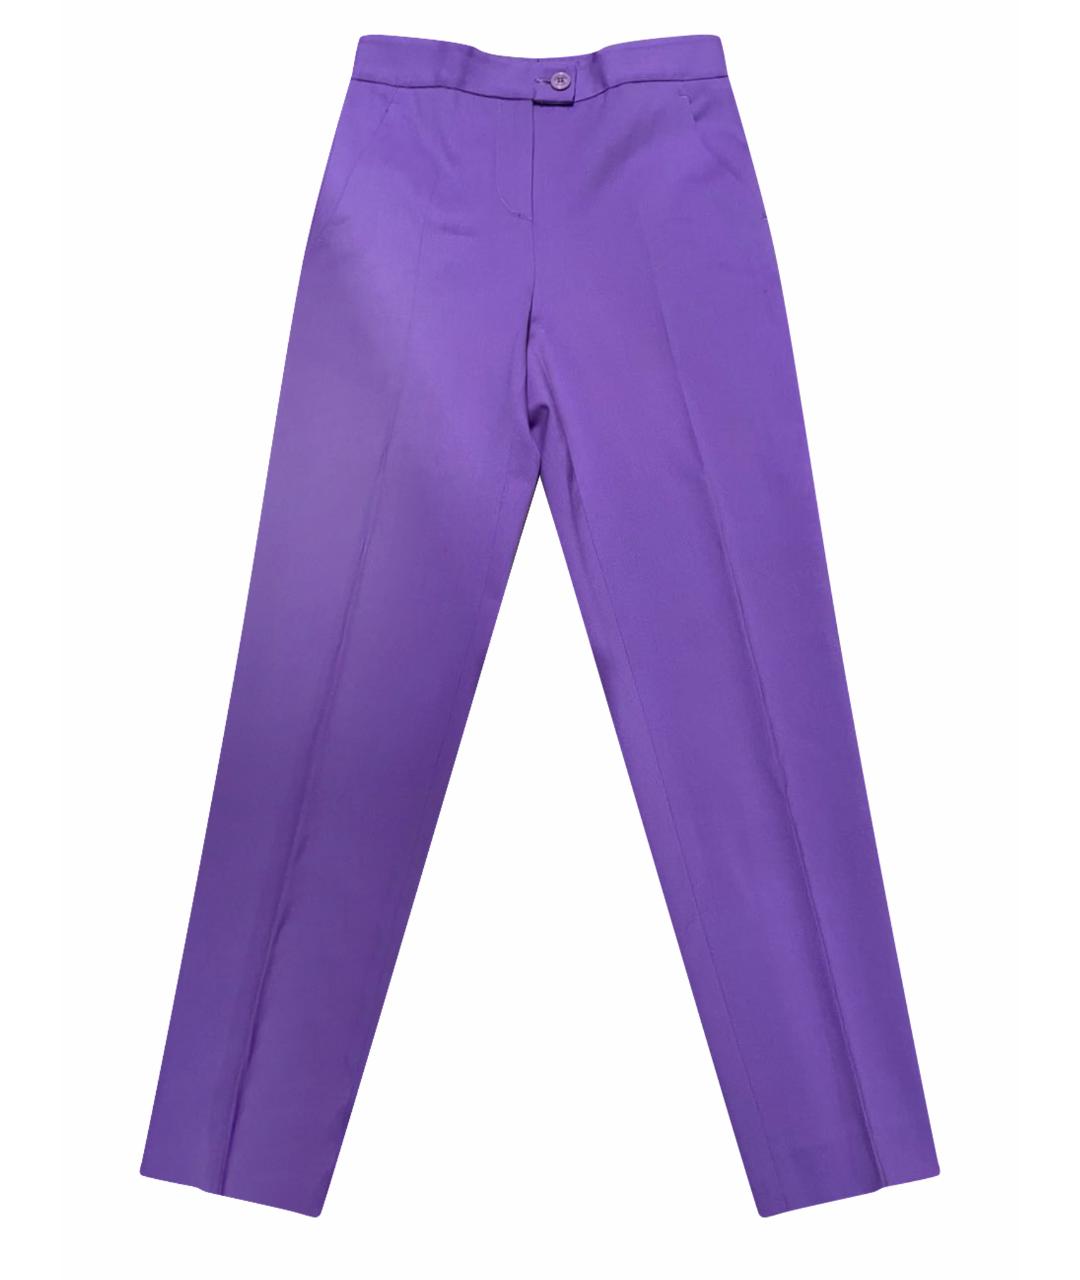 BOUTIQUE MOSCHINO Фиолетовые шерстяные брюки узкие, фото 1